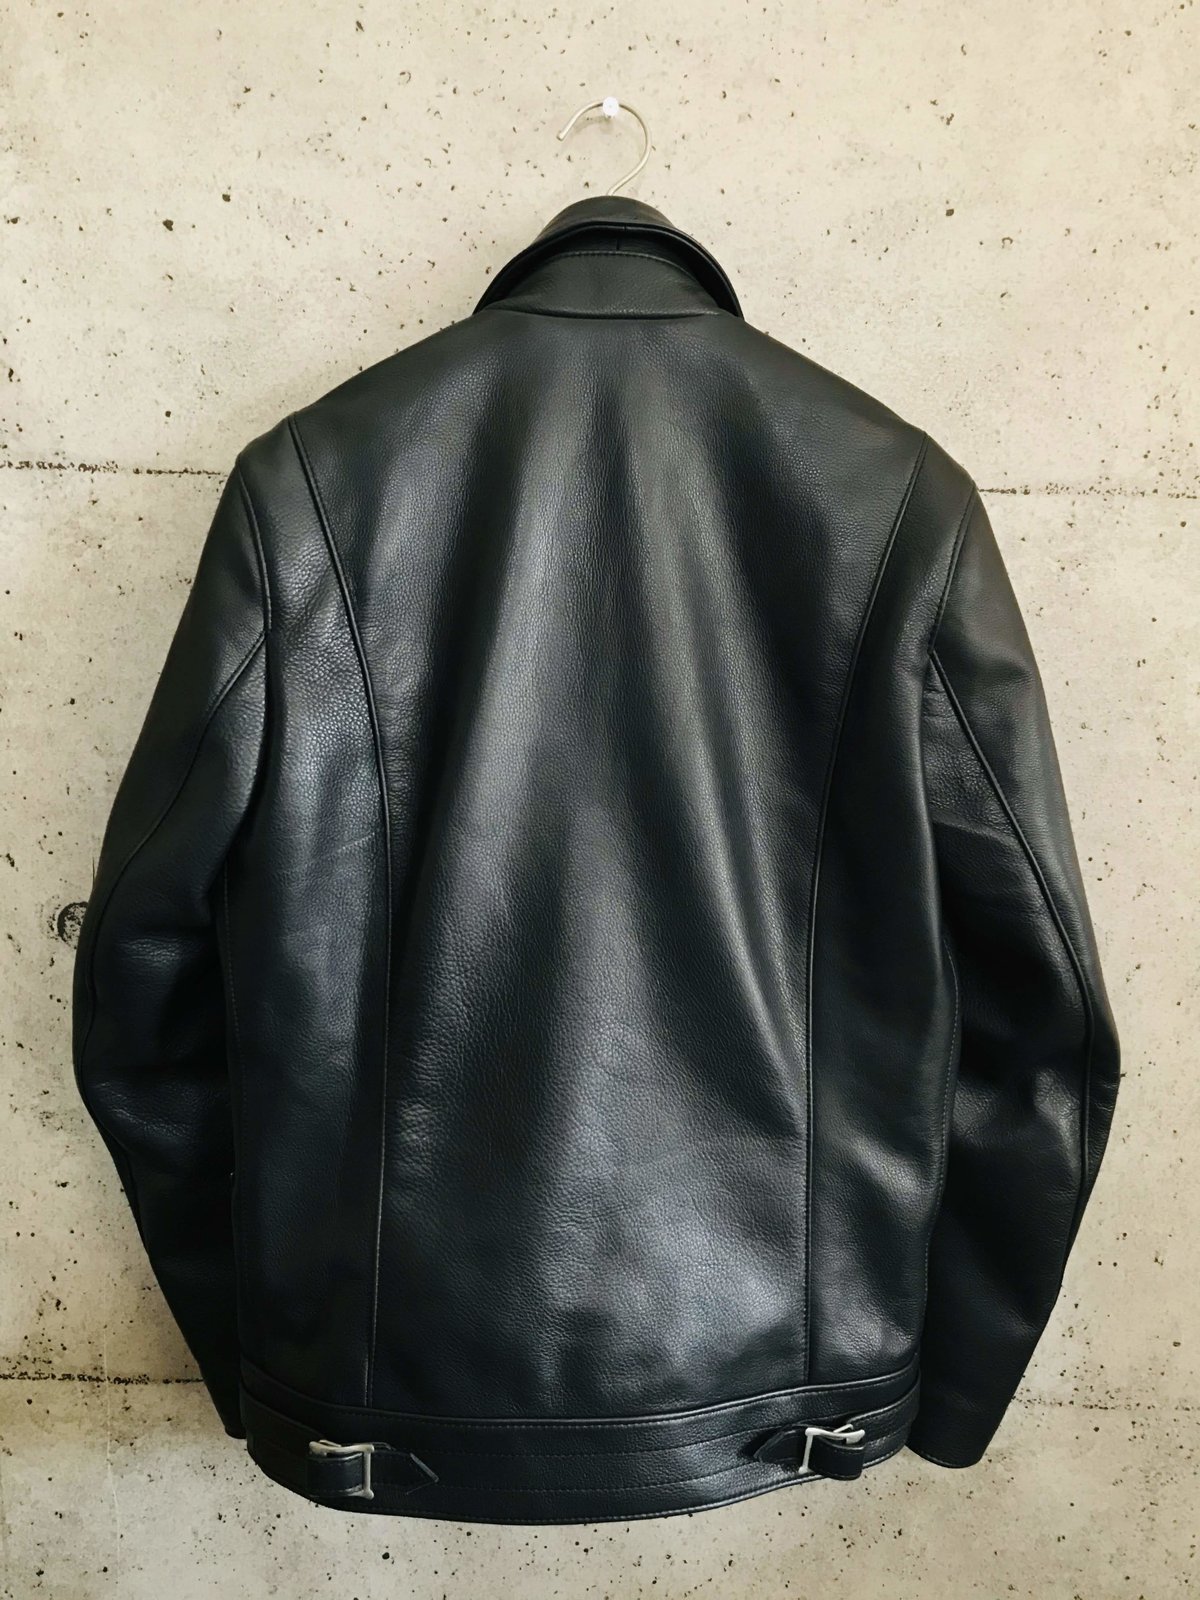 iade leather S〜Mサイズ ホースレザールイスレザー